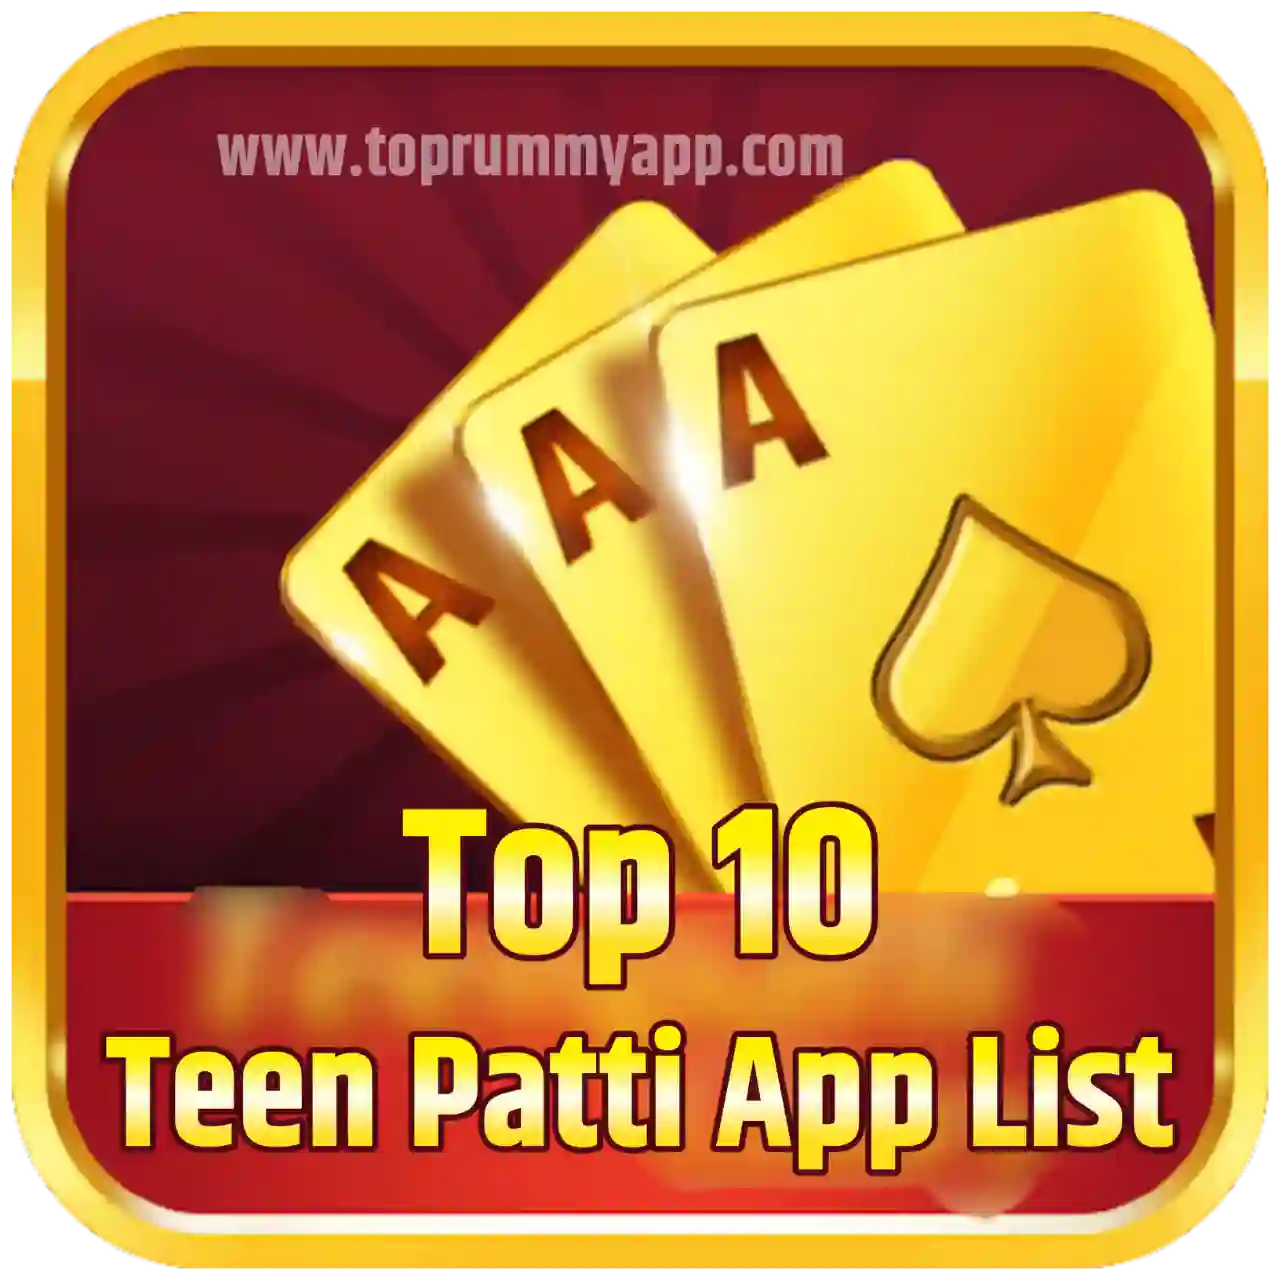 Top 10 Teen Patti App List - Top 10 Teen Patti App List ₹41 Bonus